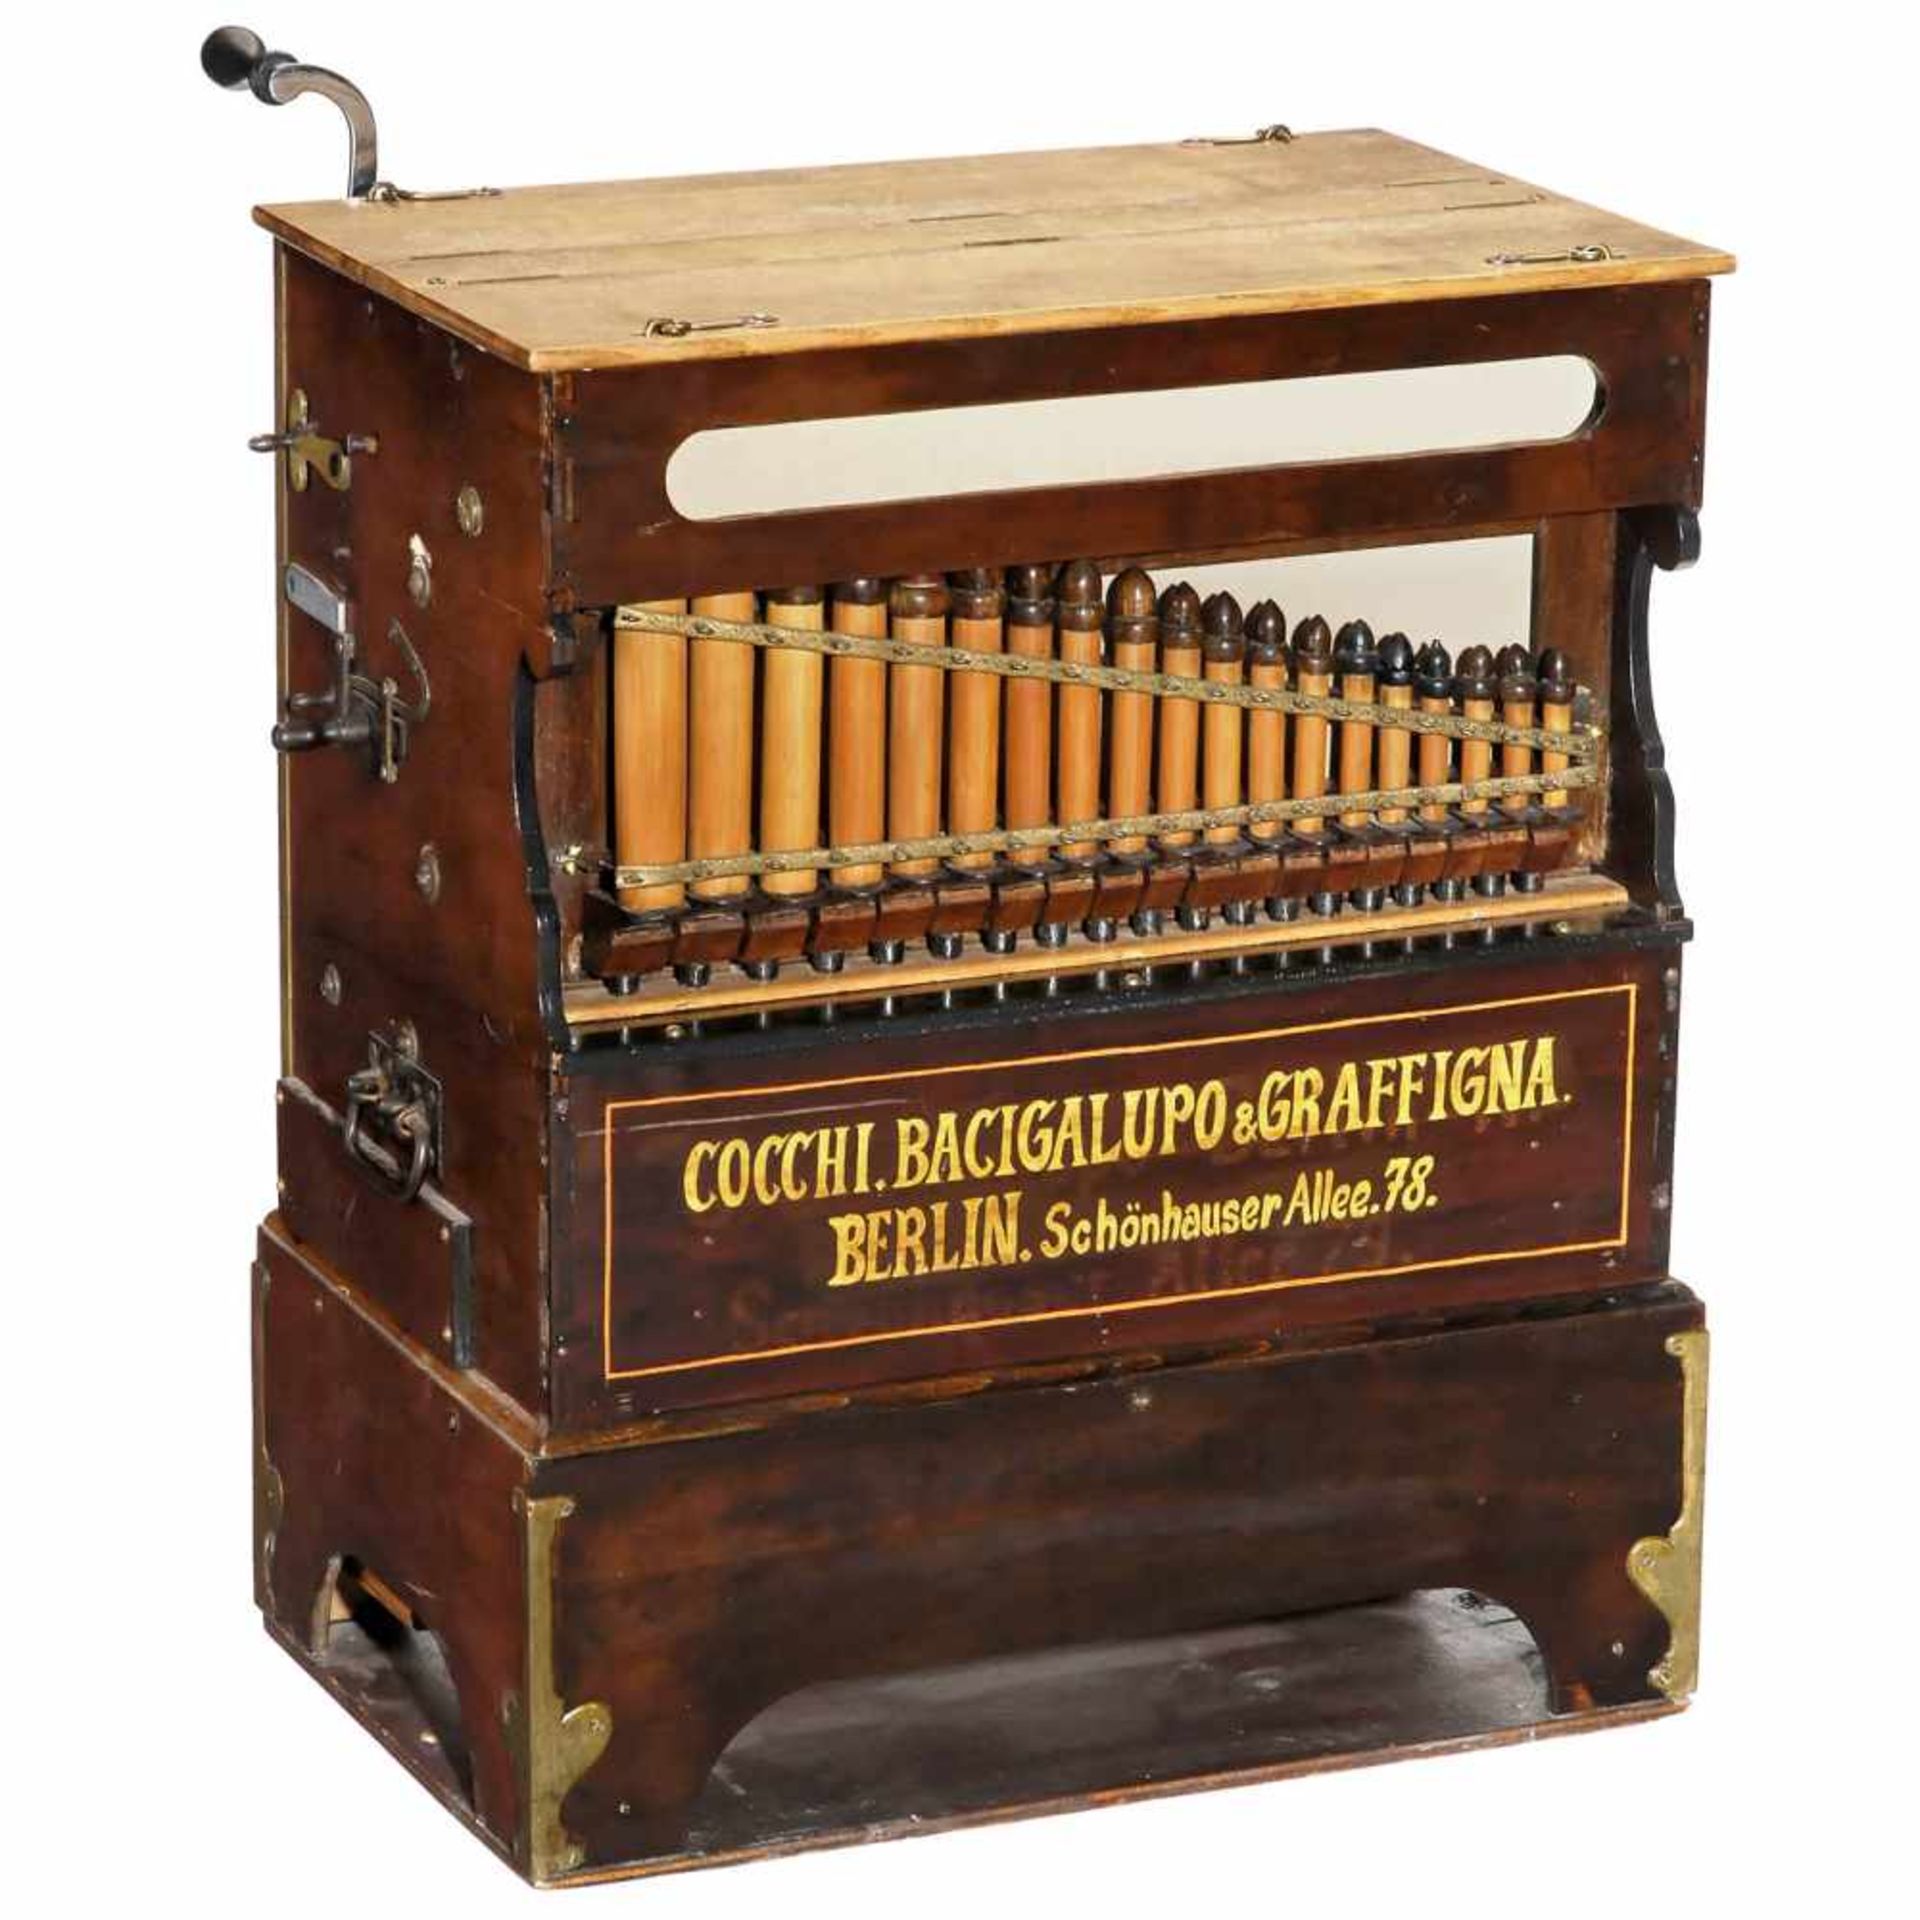 Berlin Barrel Organ by Cocchi, Bacigalupo & Graffigna, c. 1895Signed: "Cocchi, Bacigalupo &